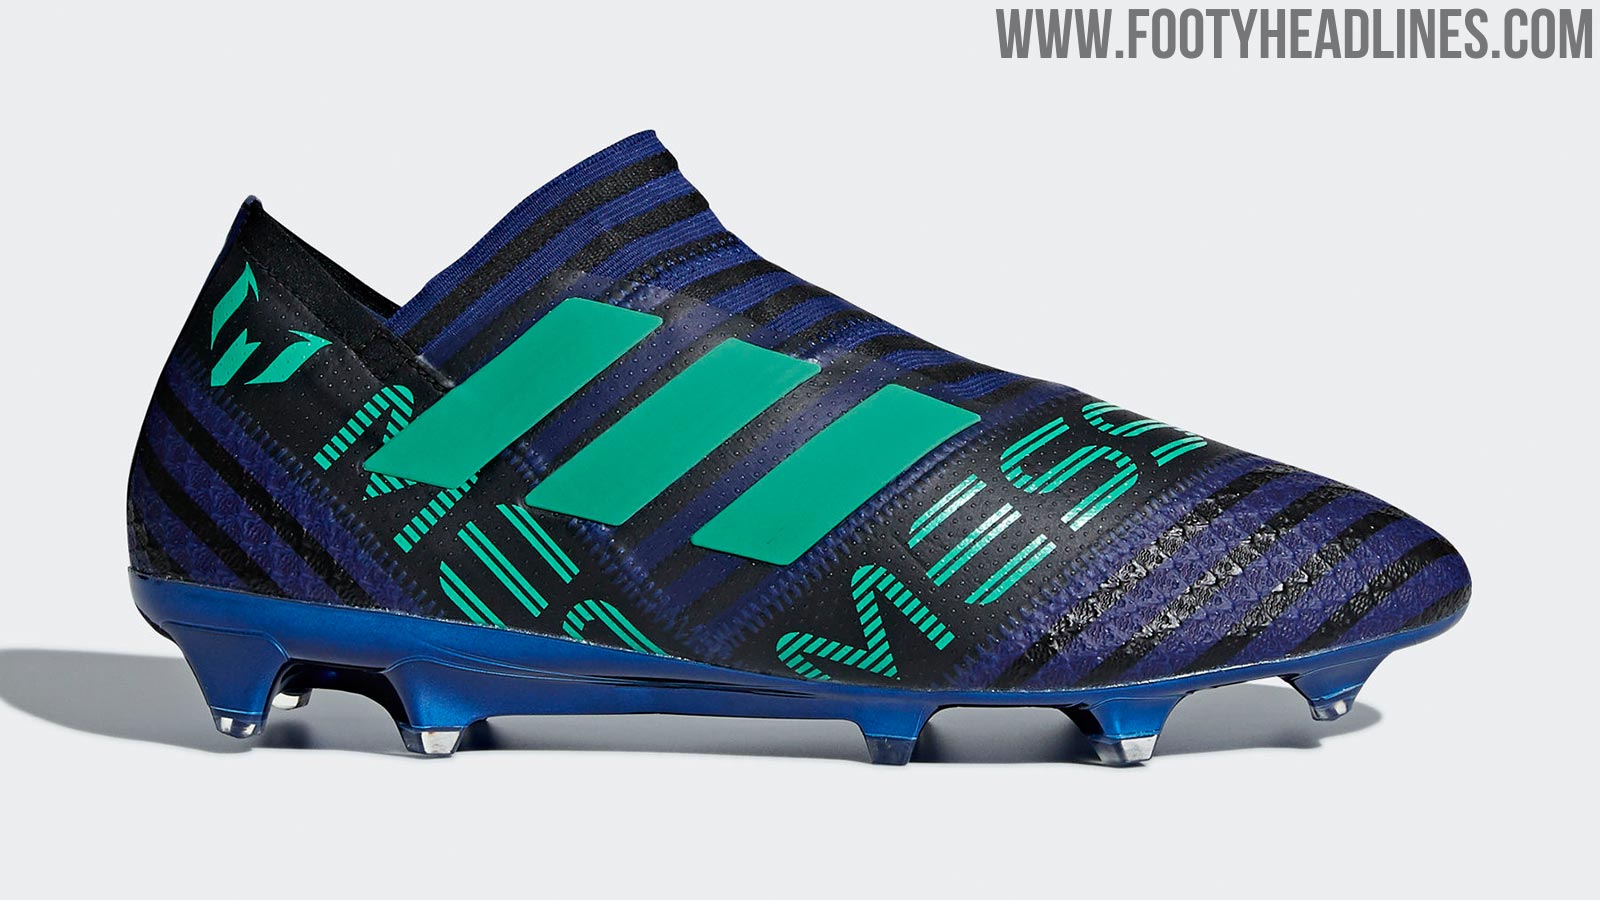 Deadly Strike' Adidas Nemeziz Messi 17 Boots - Footy Headlines